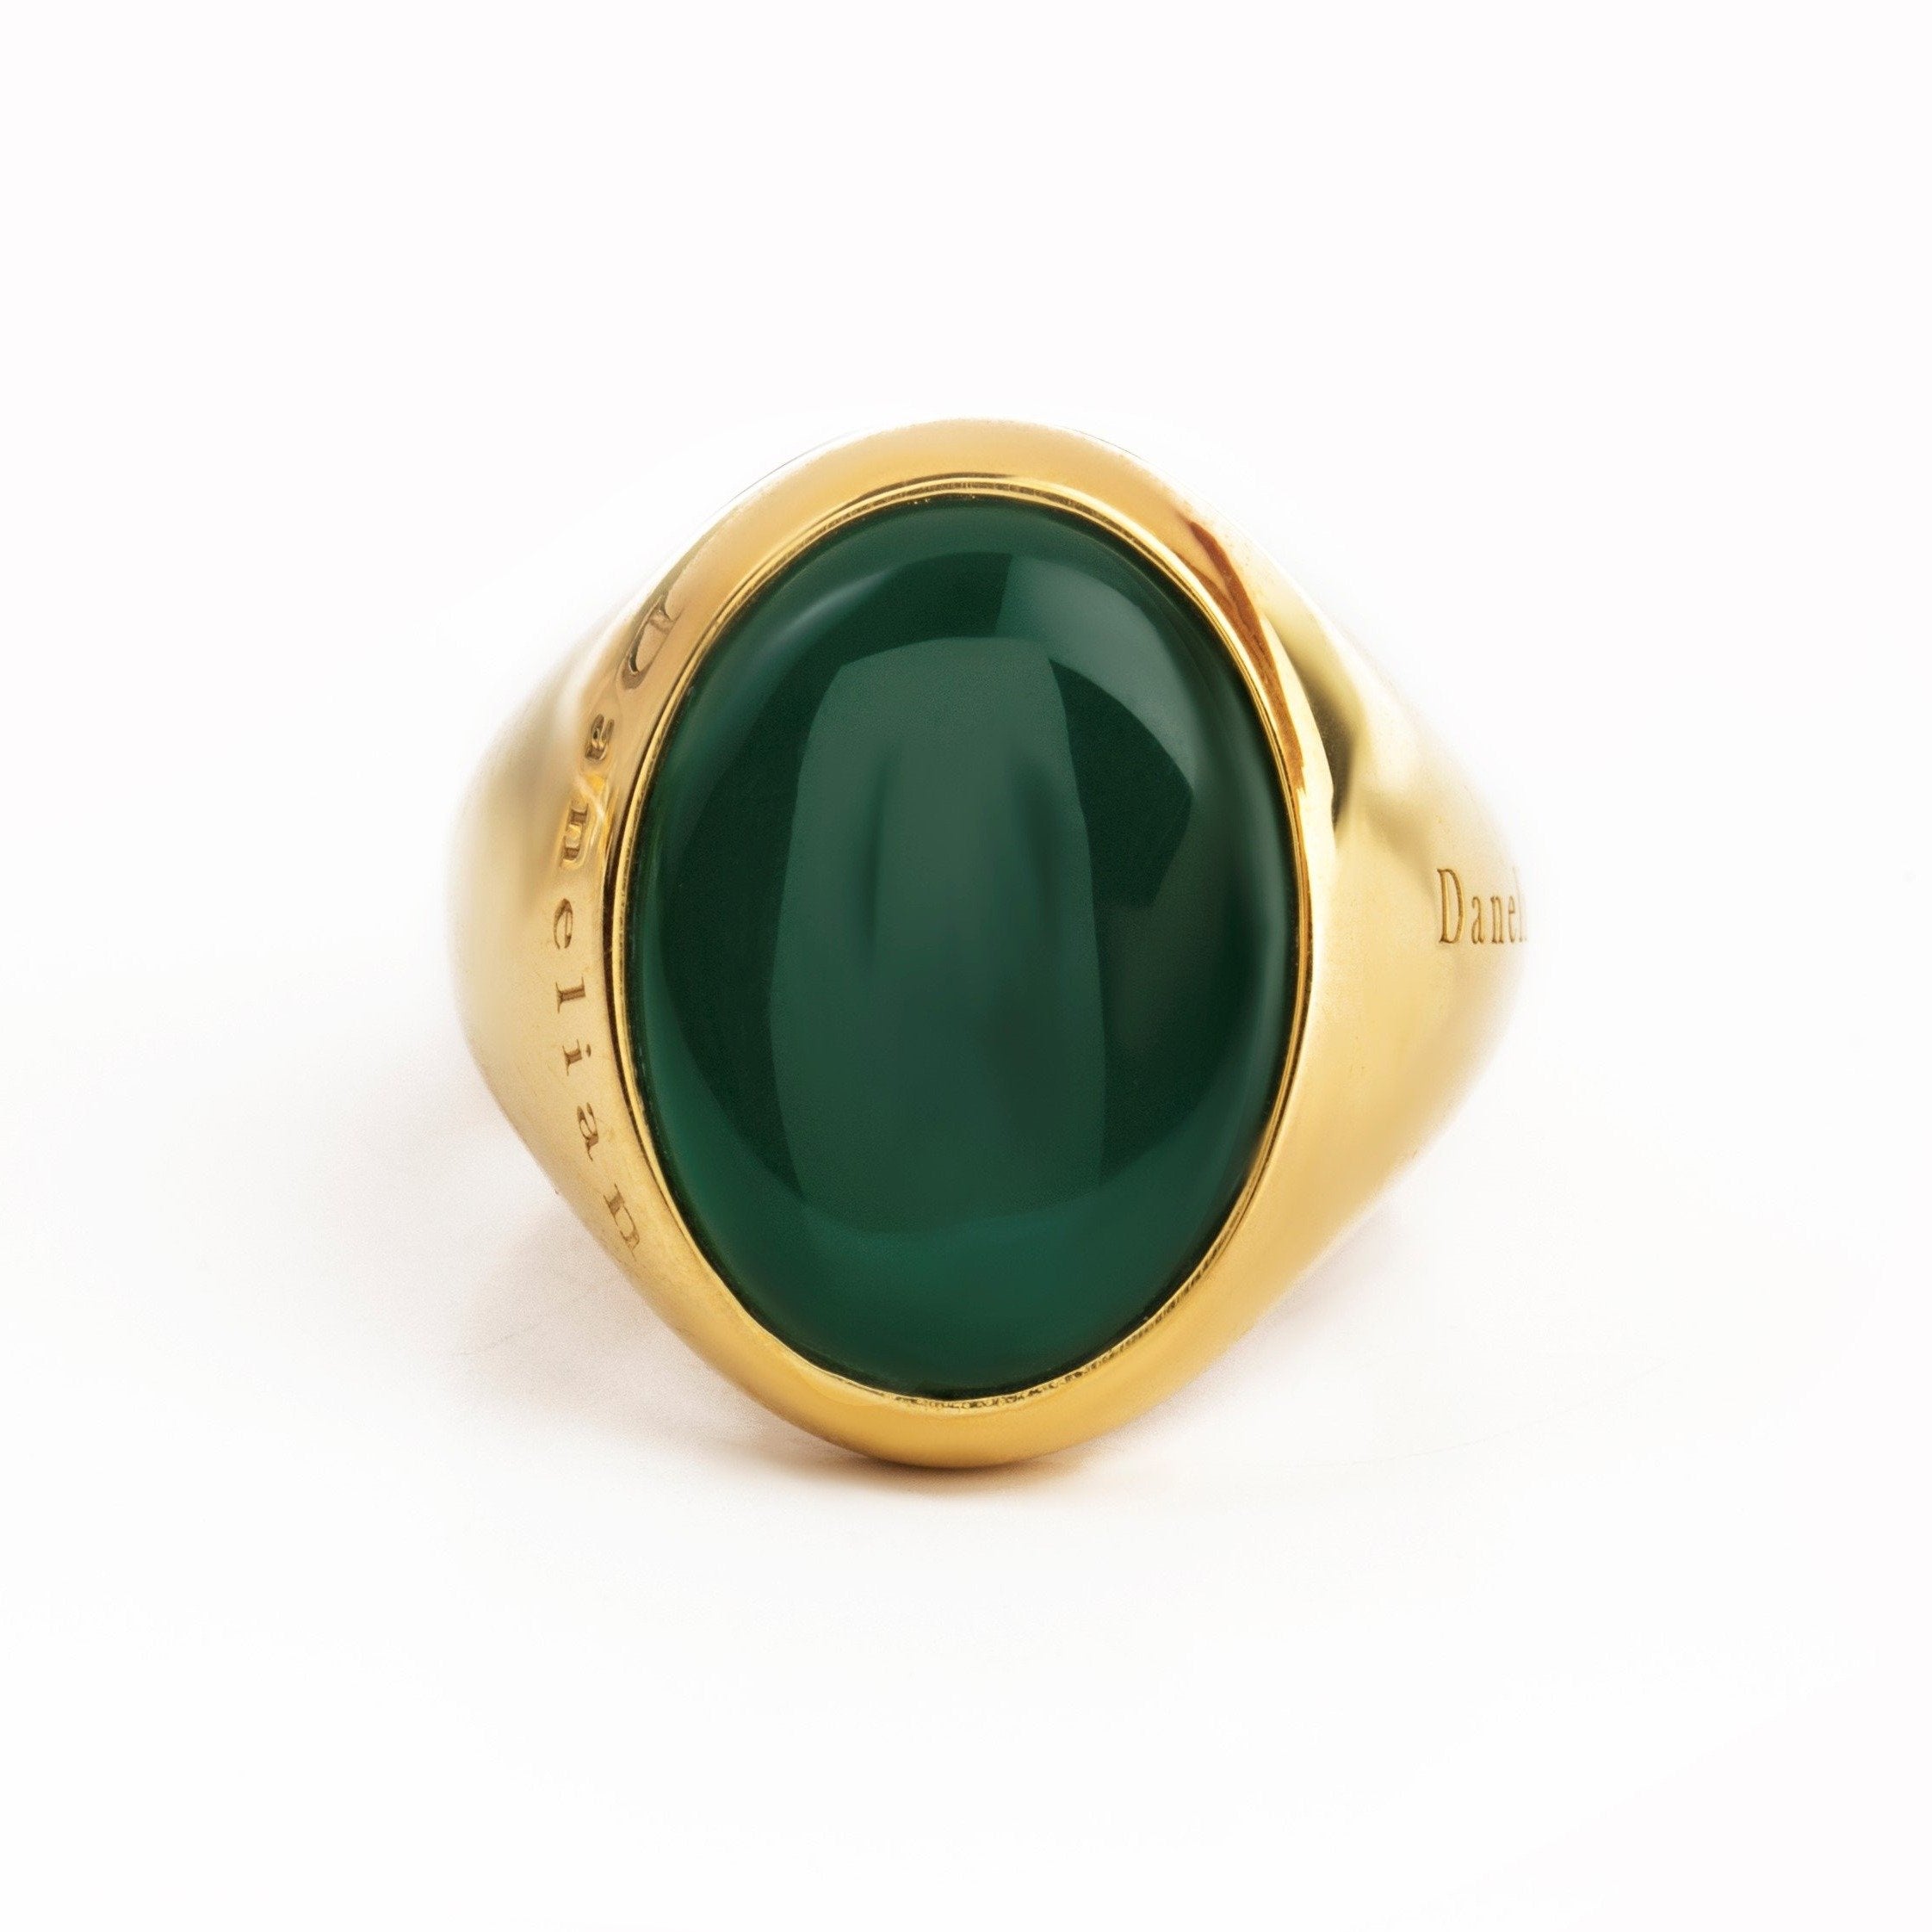 LARGE GREEN ONYX SIGNET RING - Danelian Jewelry